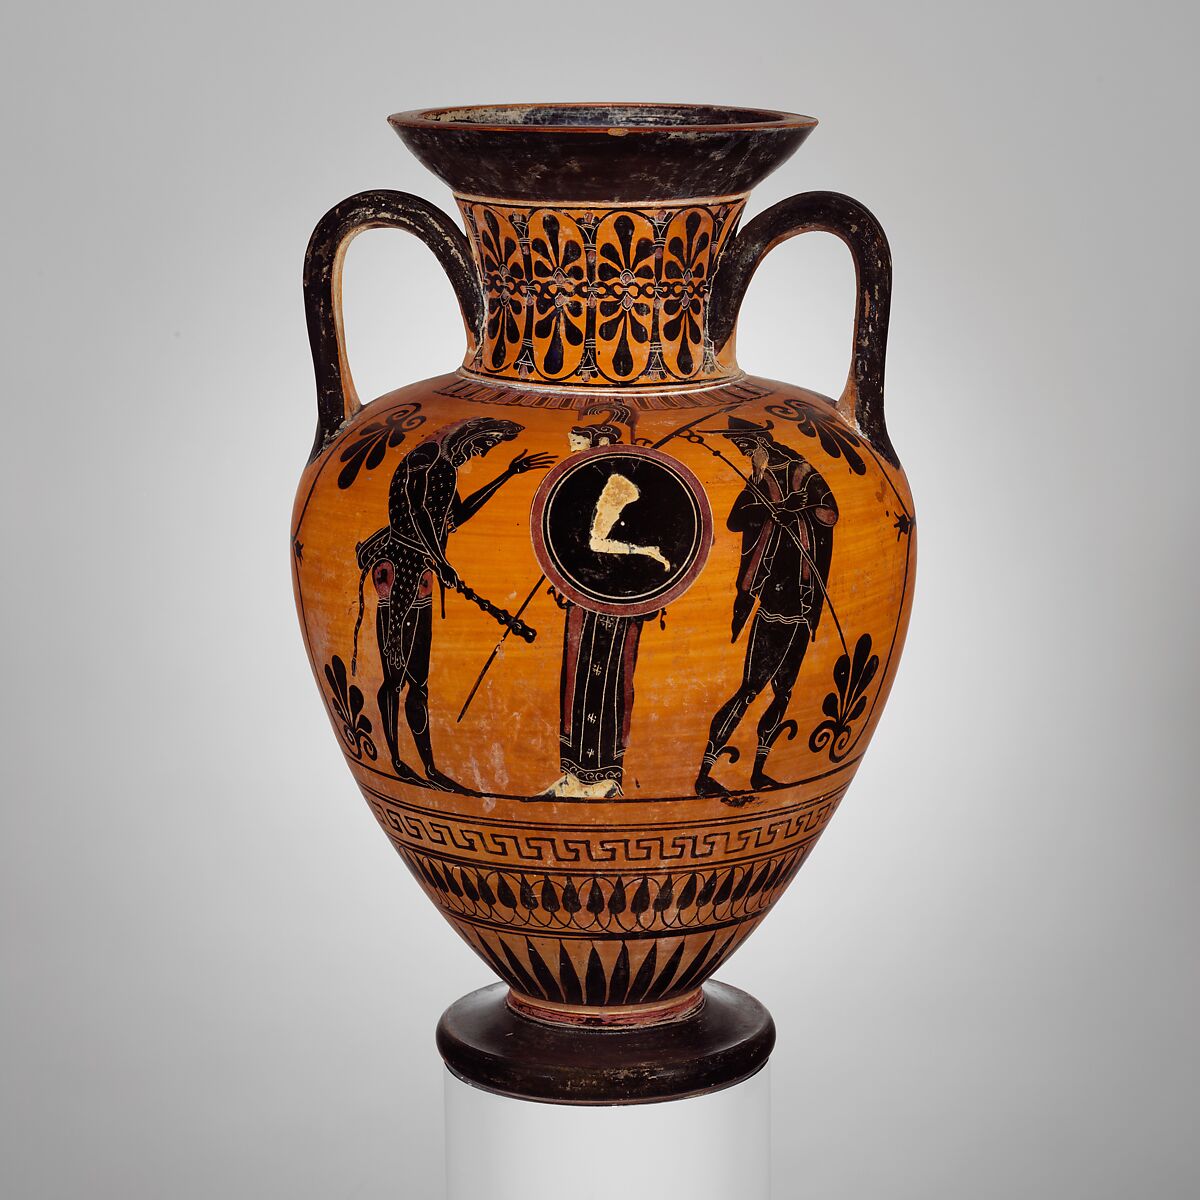 Terracotta neck-amphora (jar), Attributed to the Antimenes Painter, Terracotta, Greek, Attic 